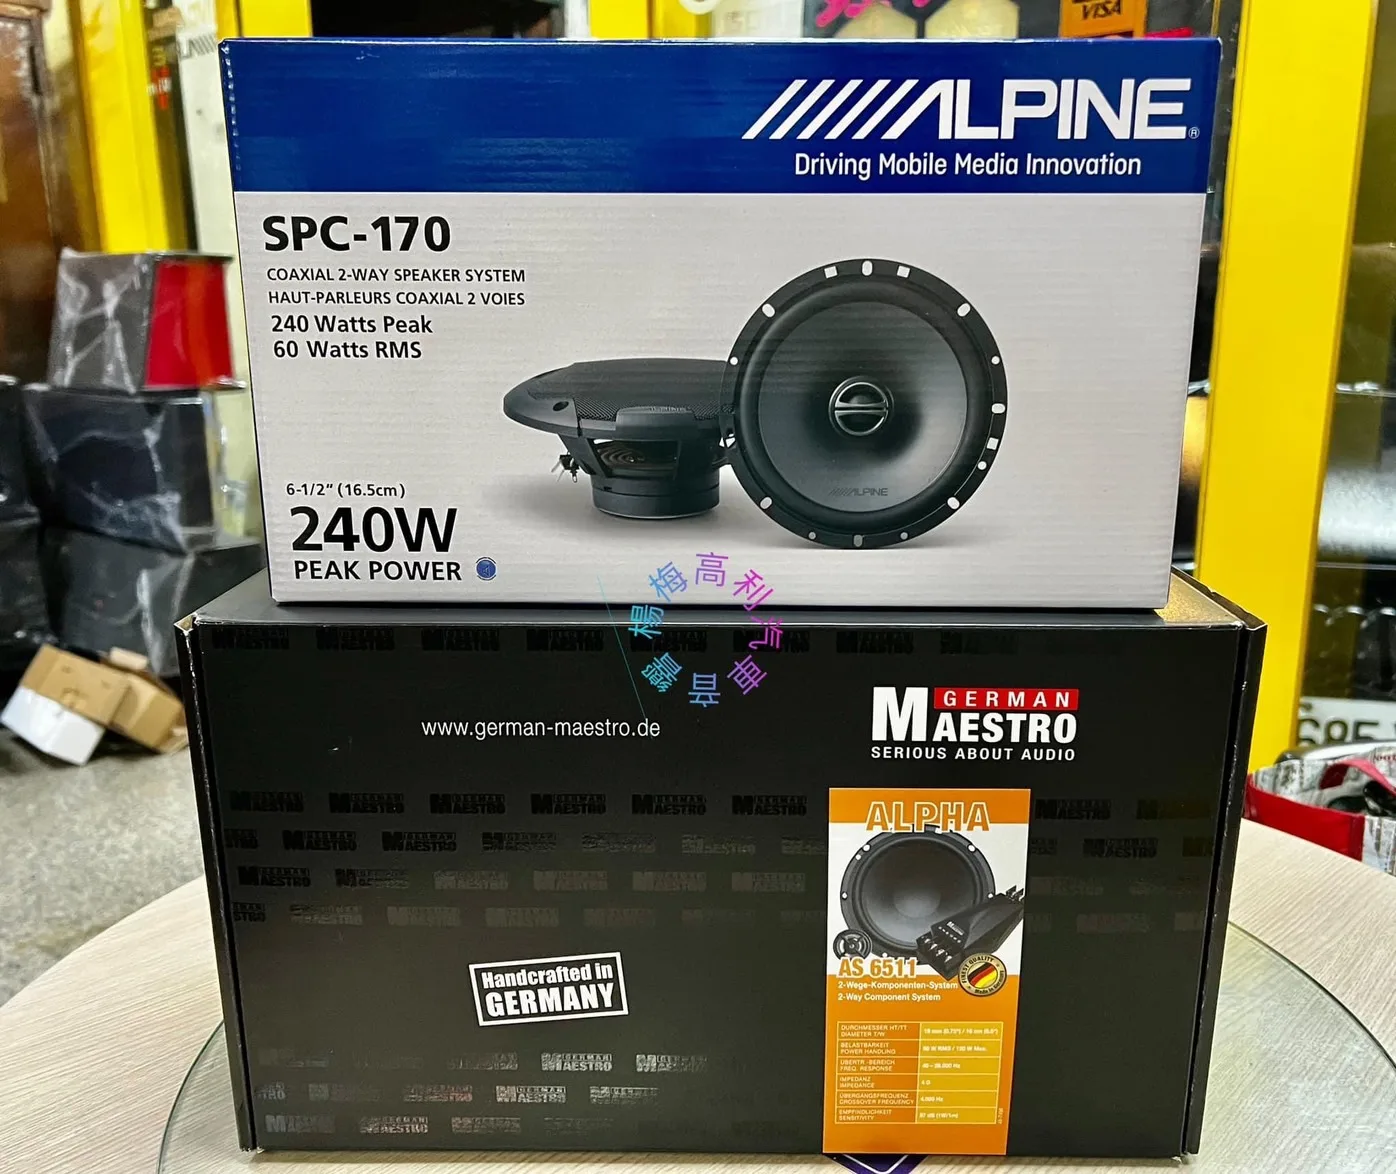 Maestro 2-way separate speaker and Alpine 2-way speaker